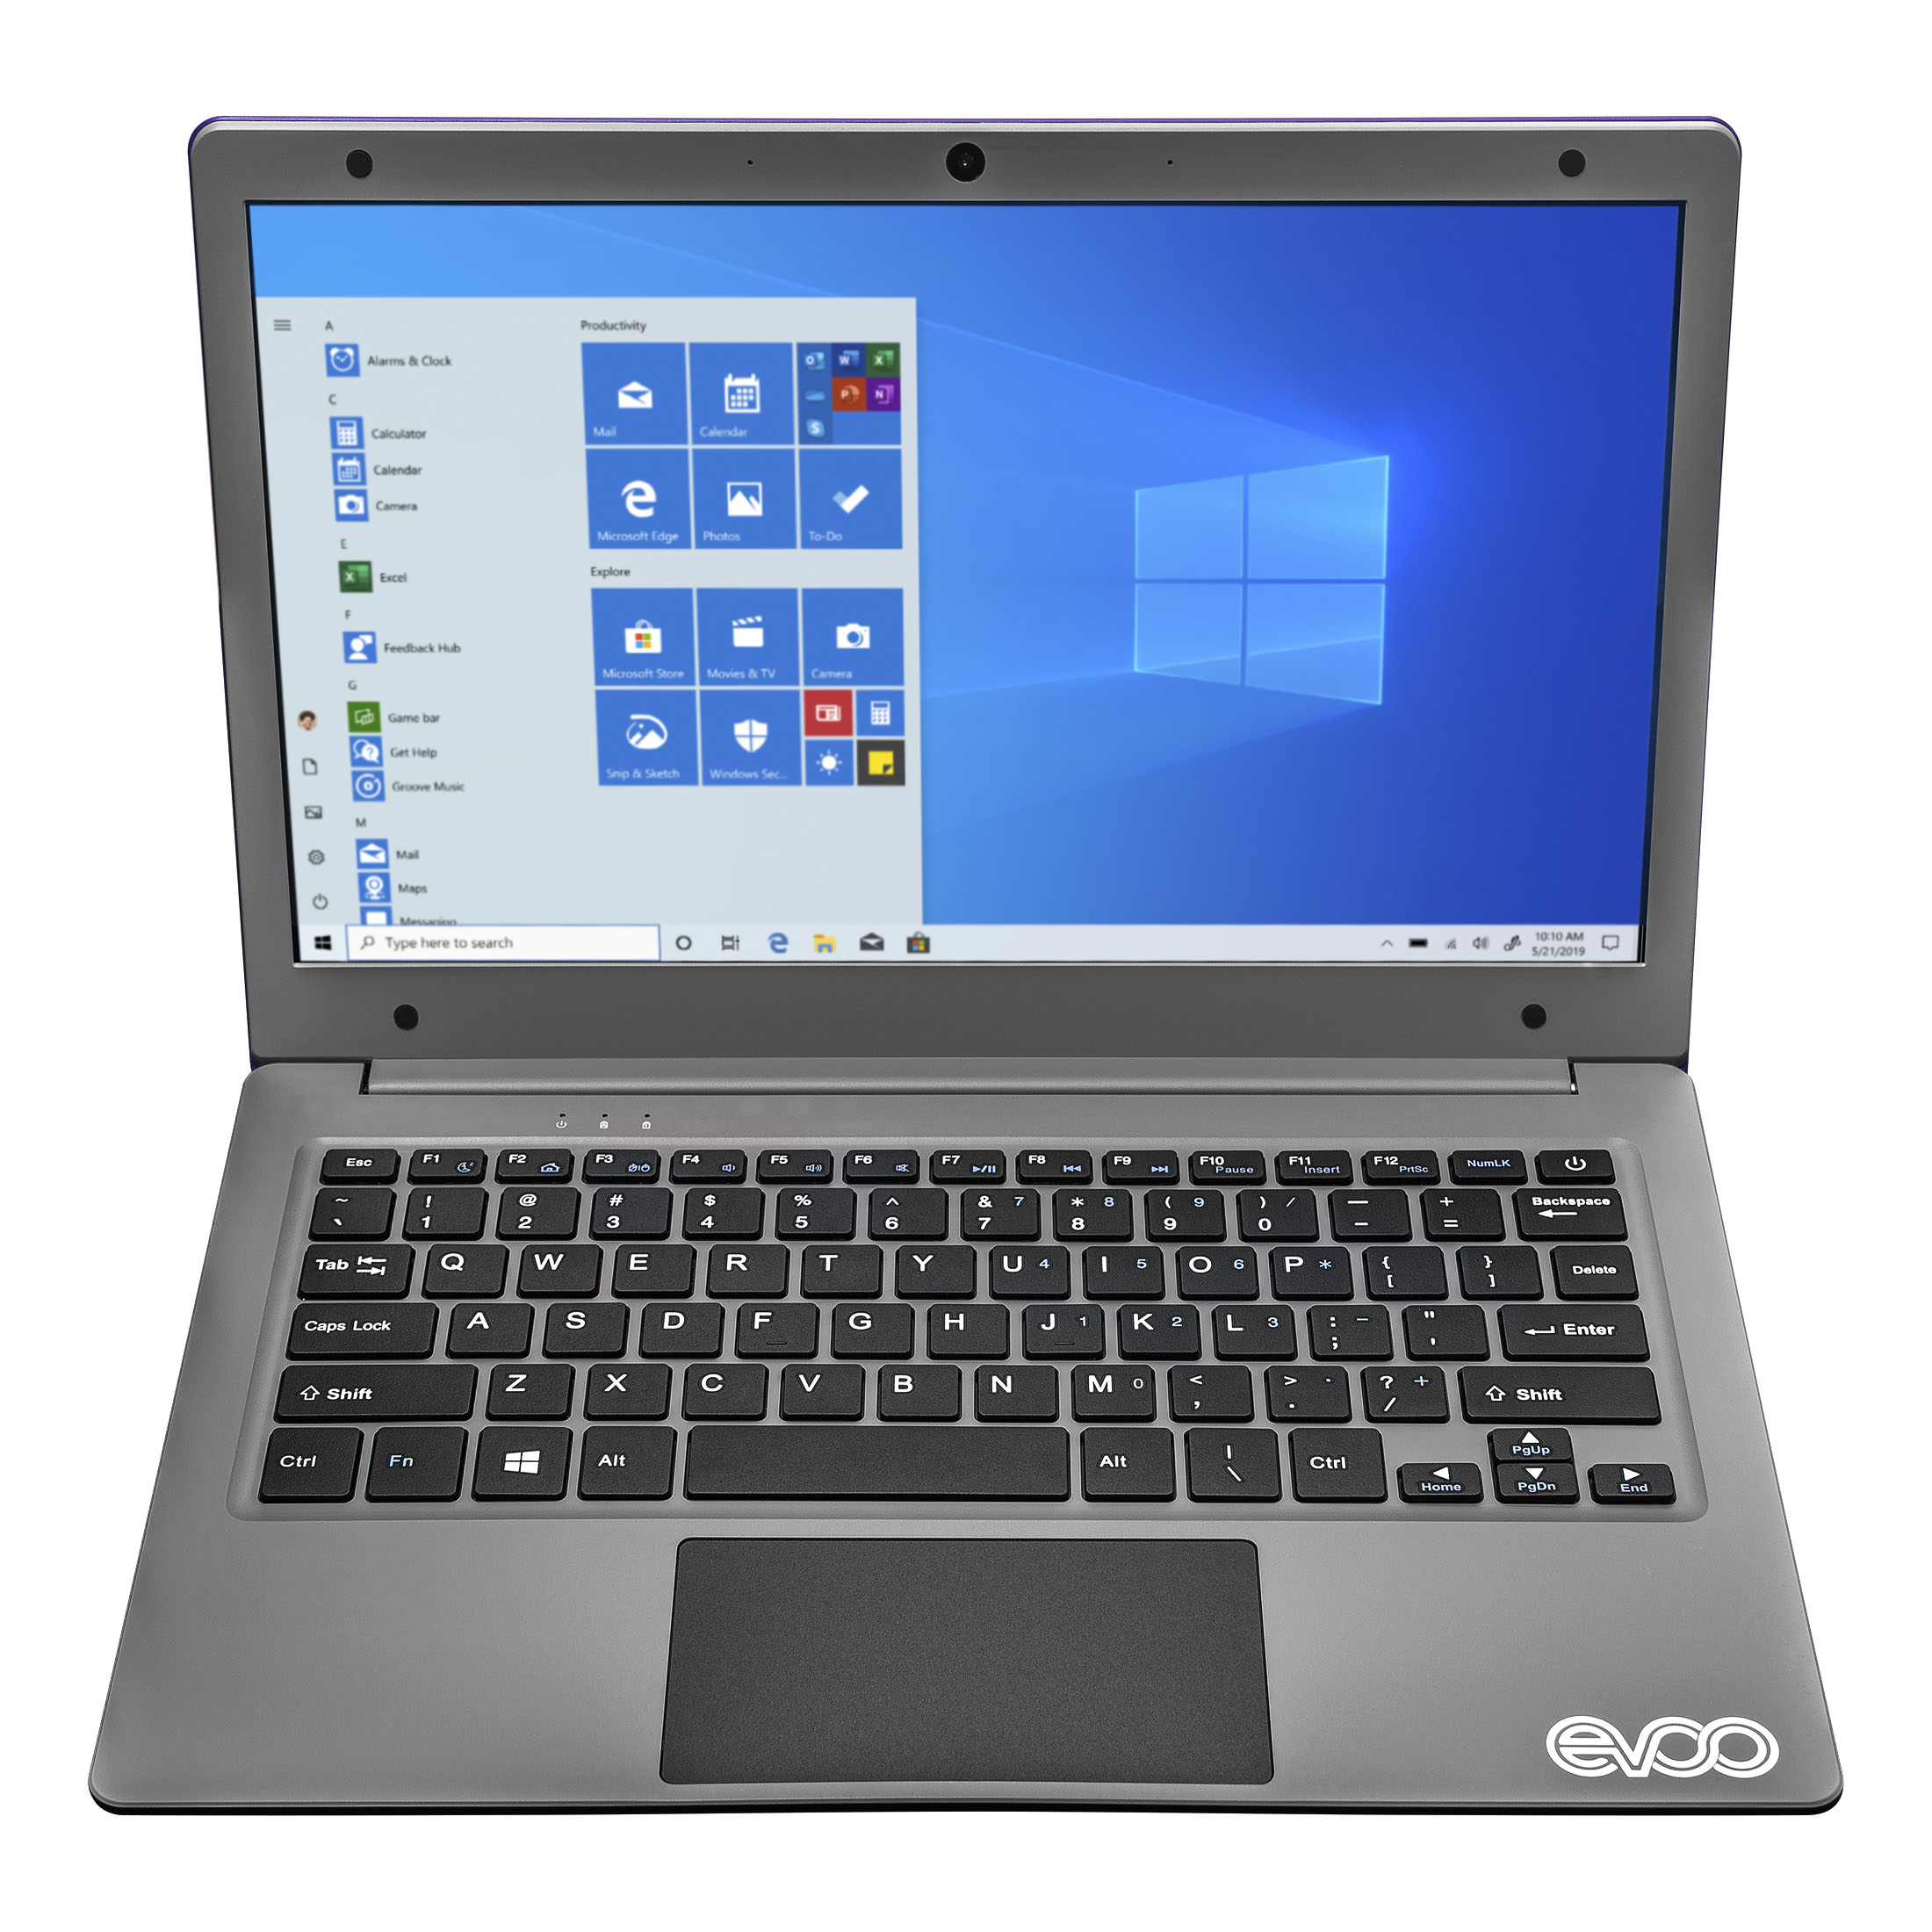 EVOO 11.6" Ultra Thin Notebook, HD Display, Intel Celeron Processor, 64GB Storage, 4GB Memory, Front Camera, HDMI, Windows 10 S, Microsoft 365 Personal 1-Year Included, Blue $129